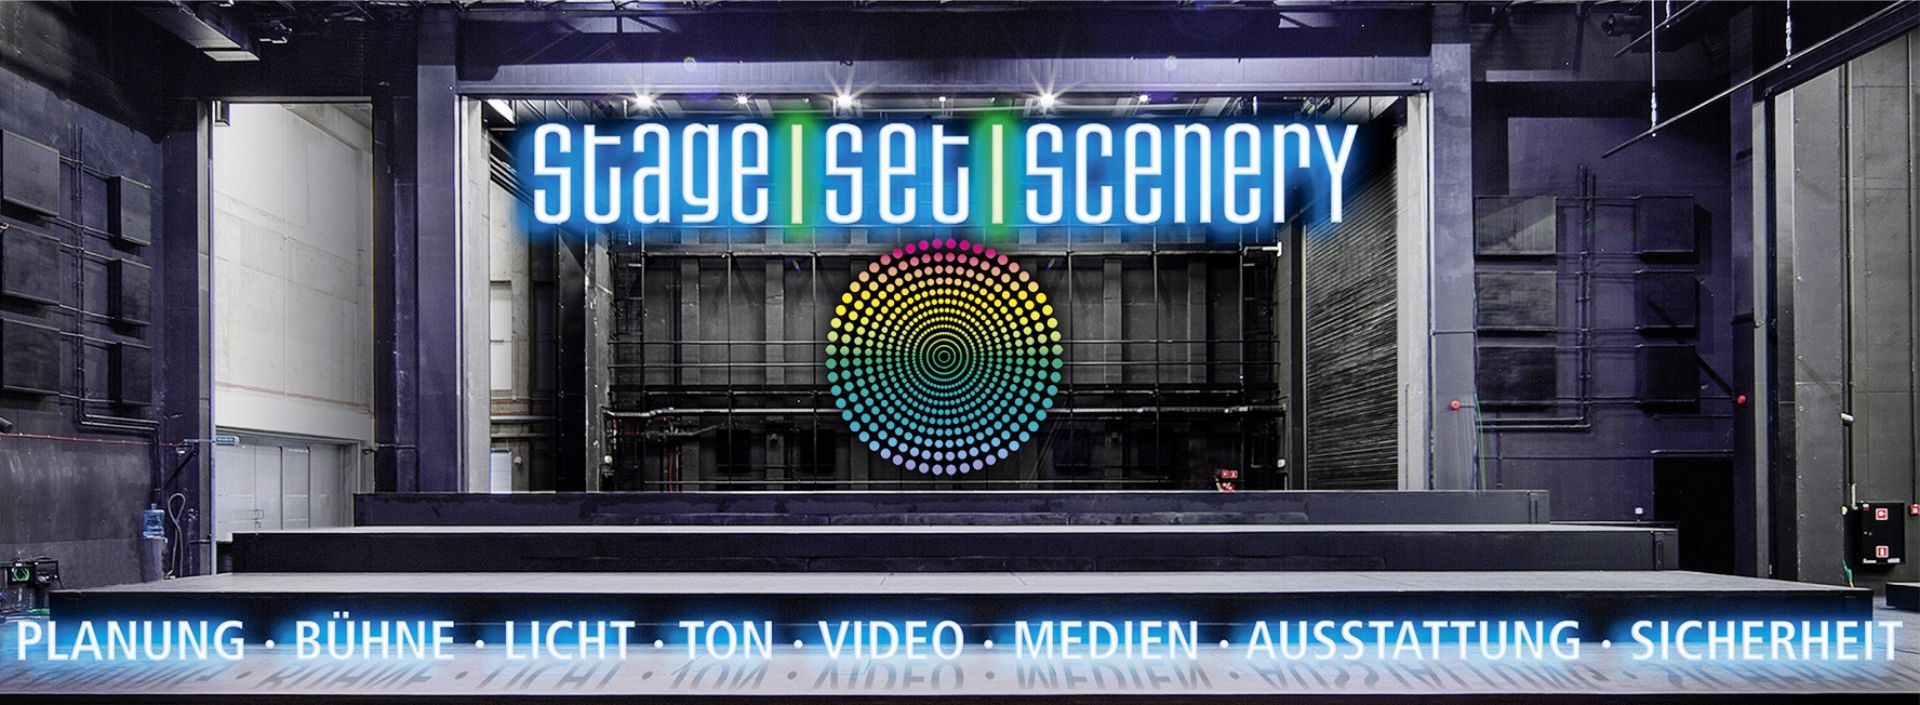 Mietmöbel SWOOFLE - GoodieBag Stage Set Scenery